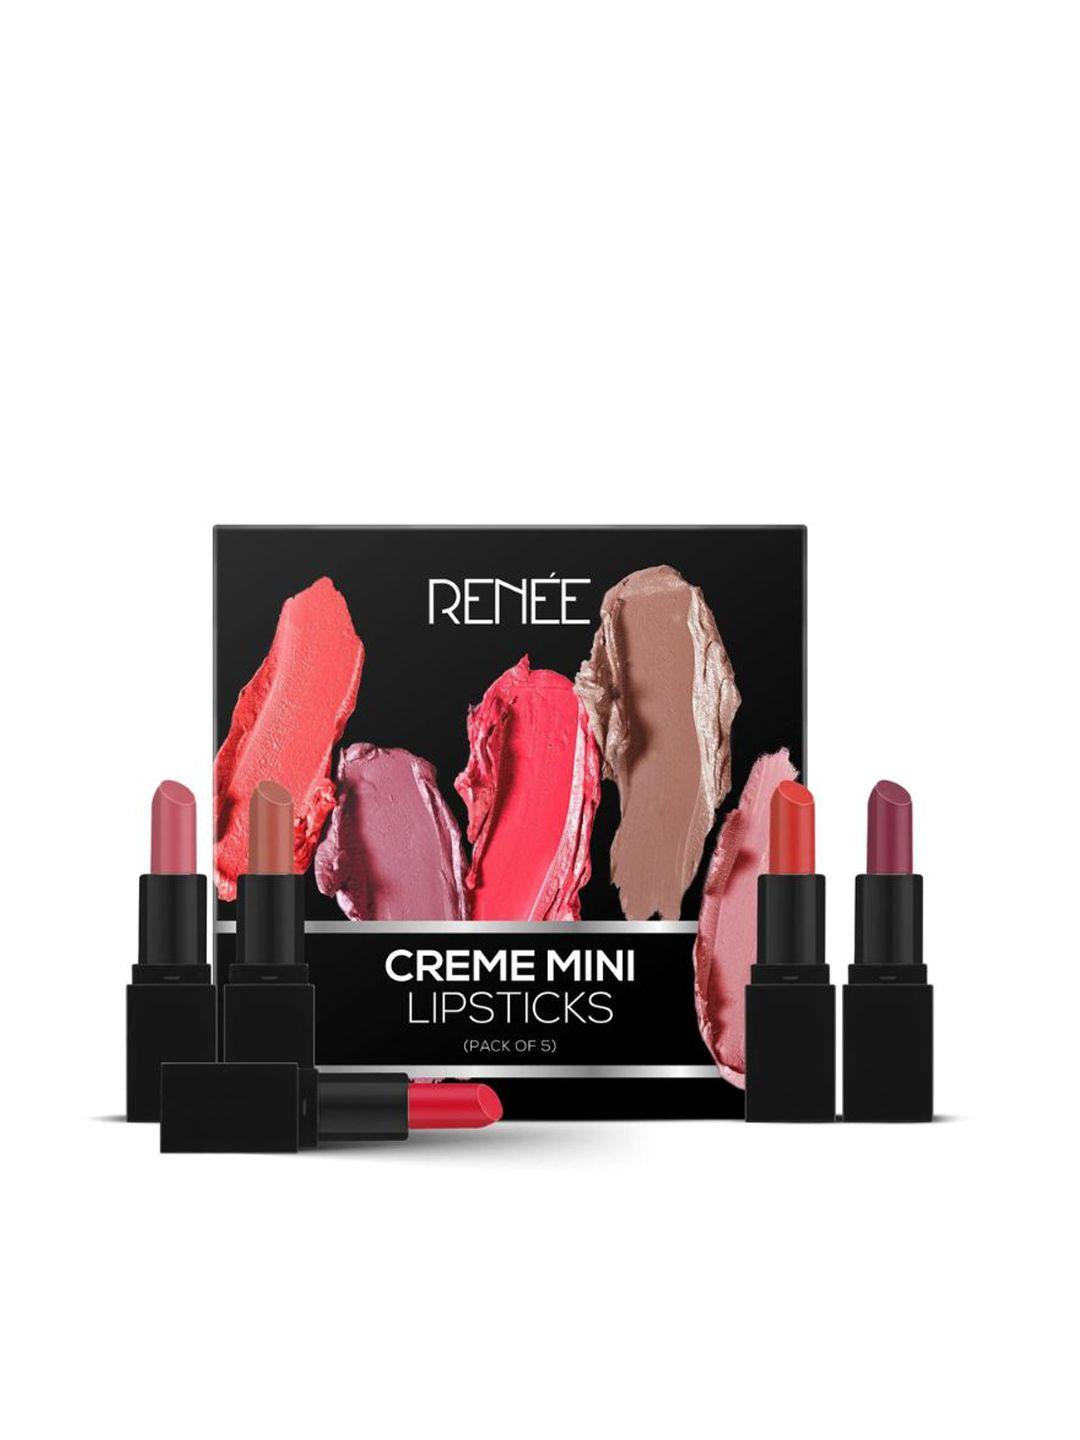 renee creme mini lipstick  pack of 5 1.65g each